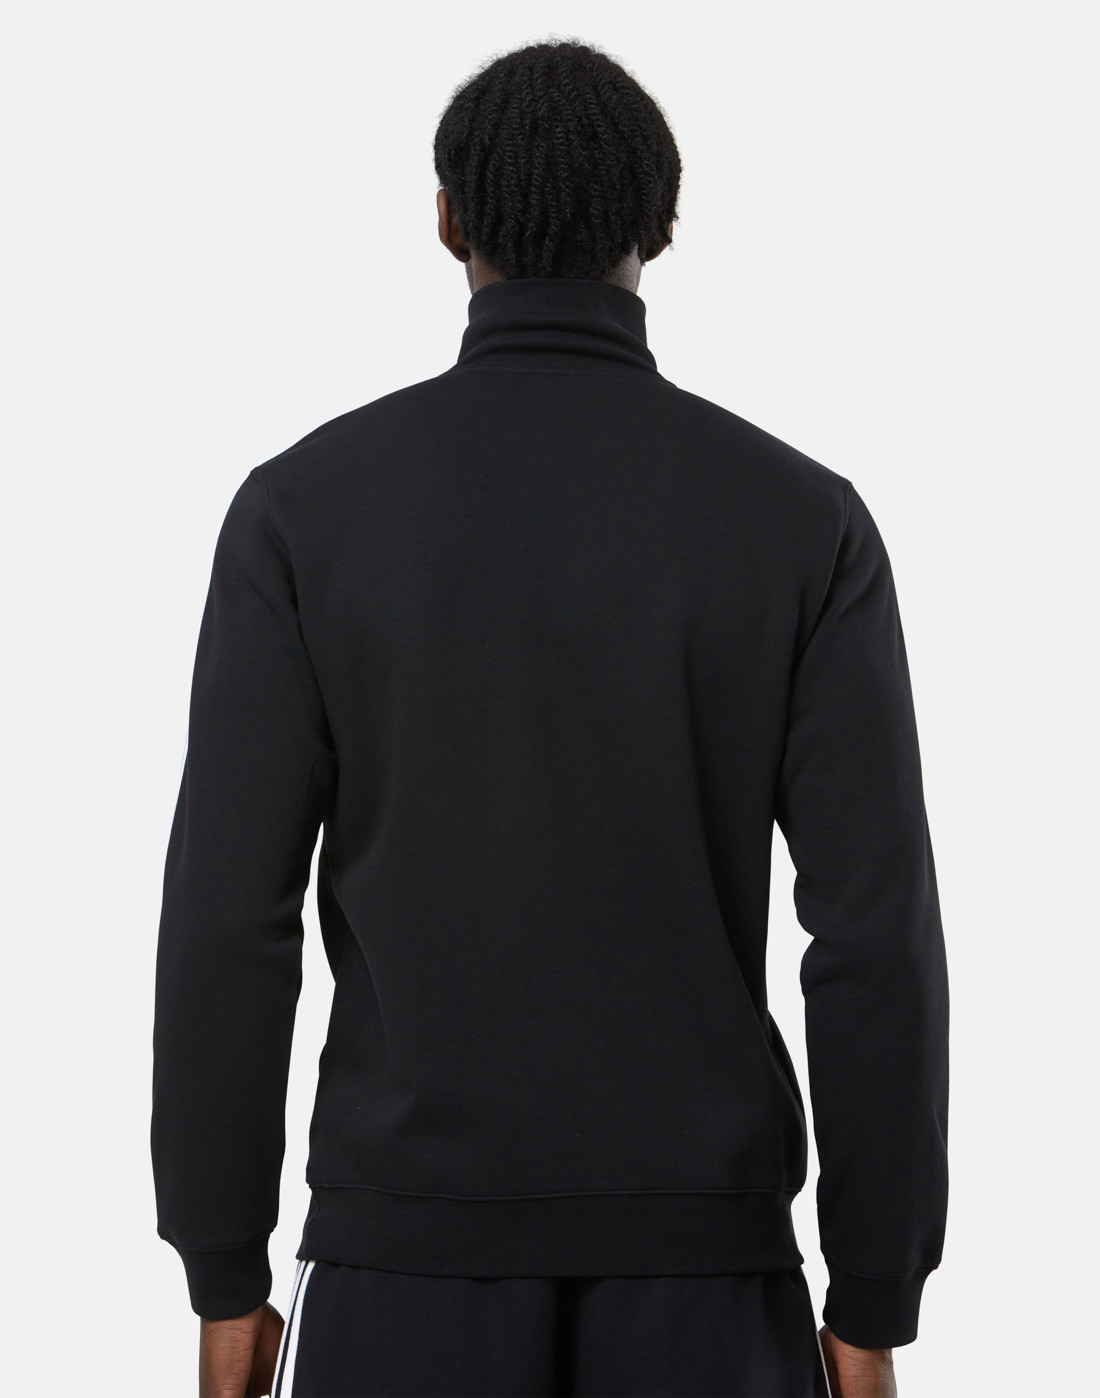 adidas Originals Mens 3 Stripe Half Zip Fleece - Black | Life Style ...